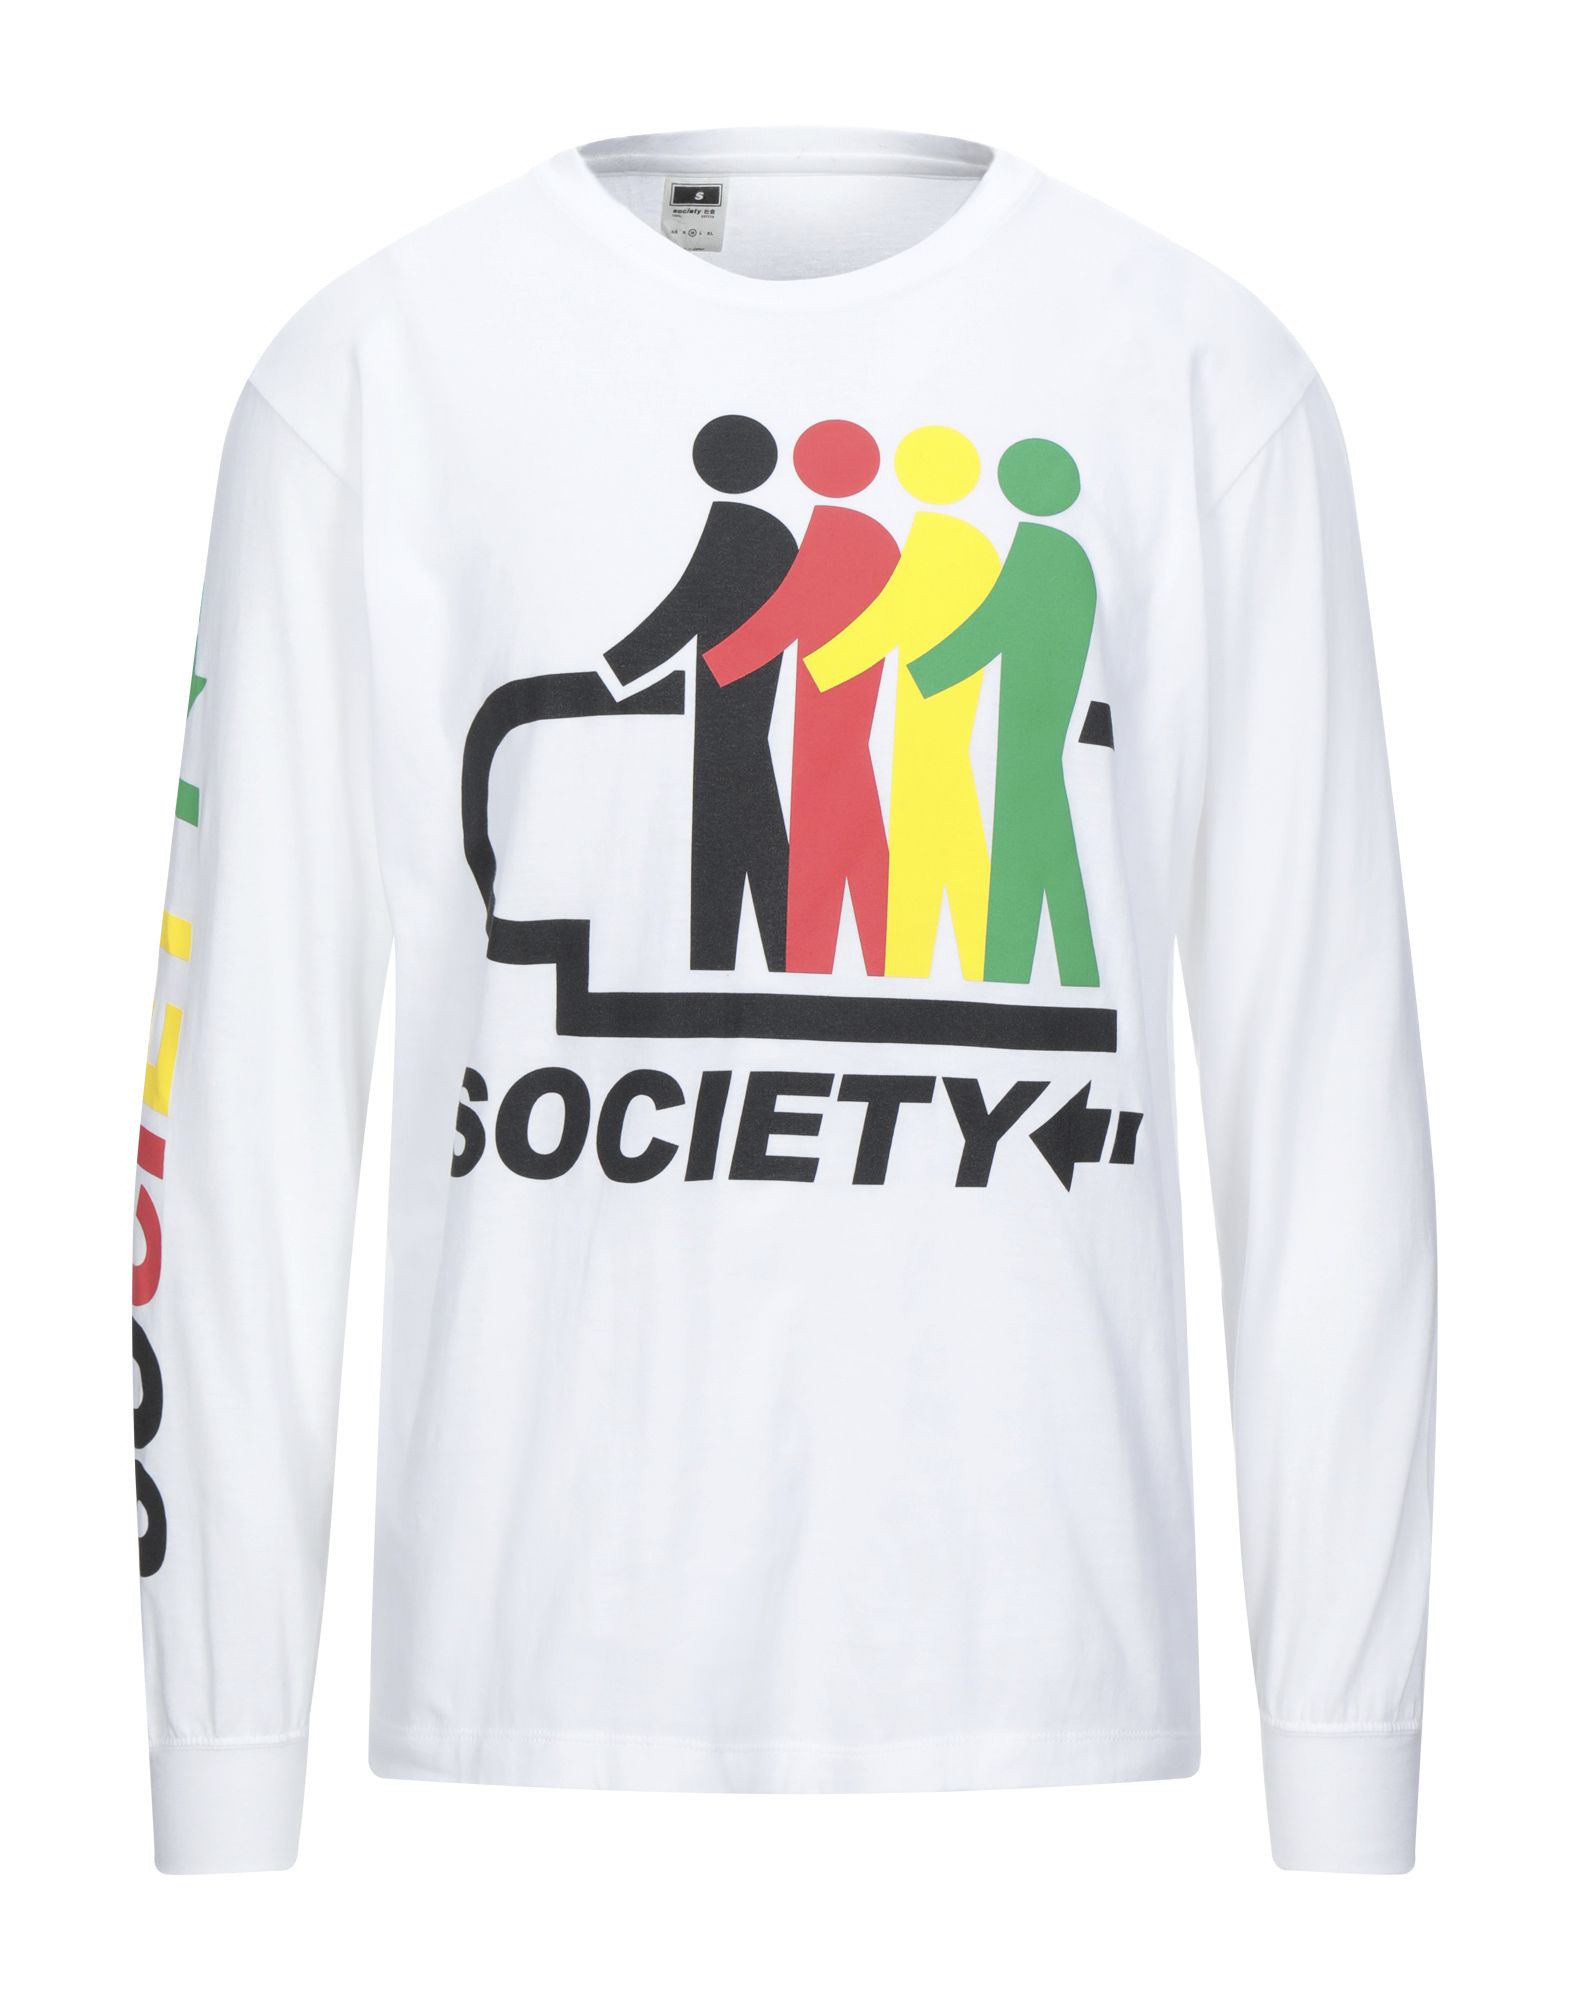 Society купить. Созидательное общество футболка. Society толстовка. Футболка Lost Society. Society бренд.